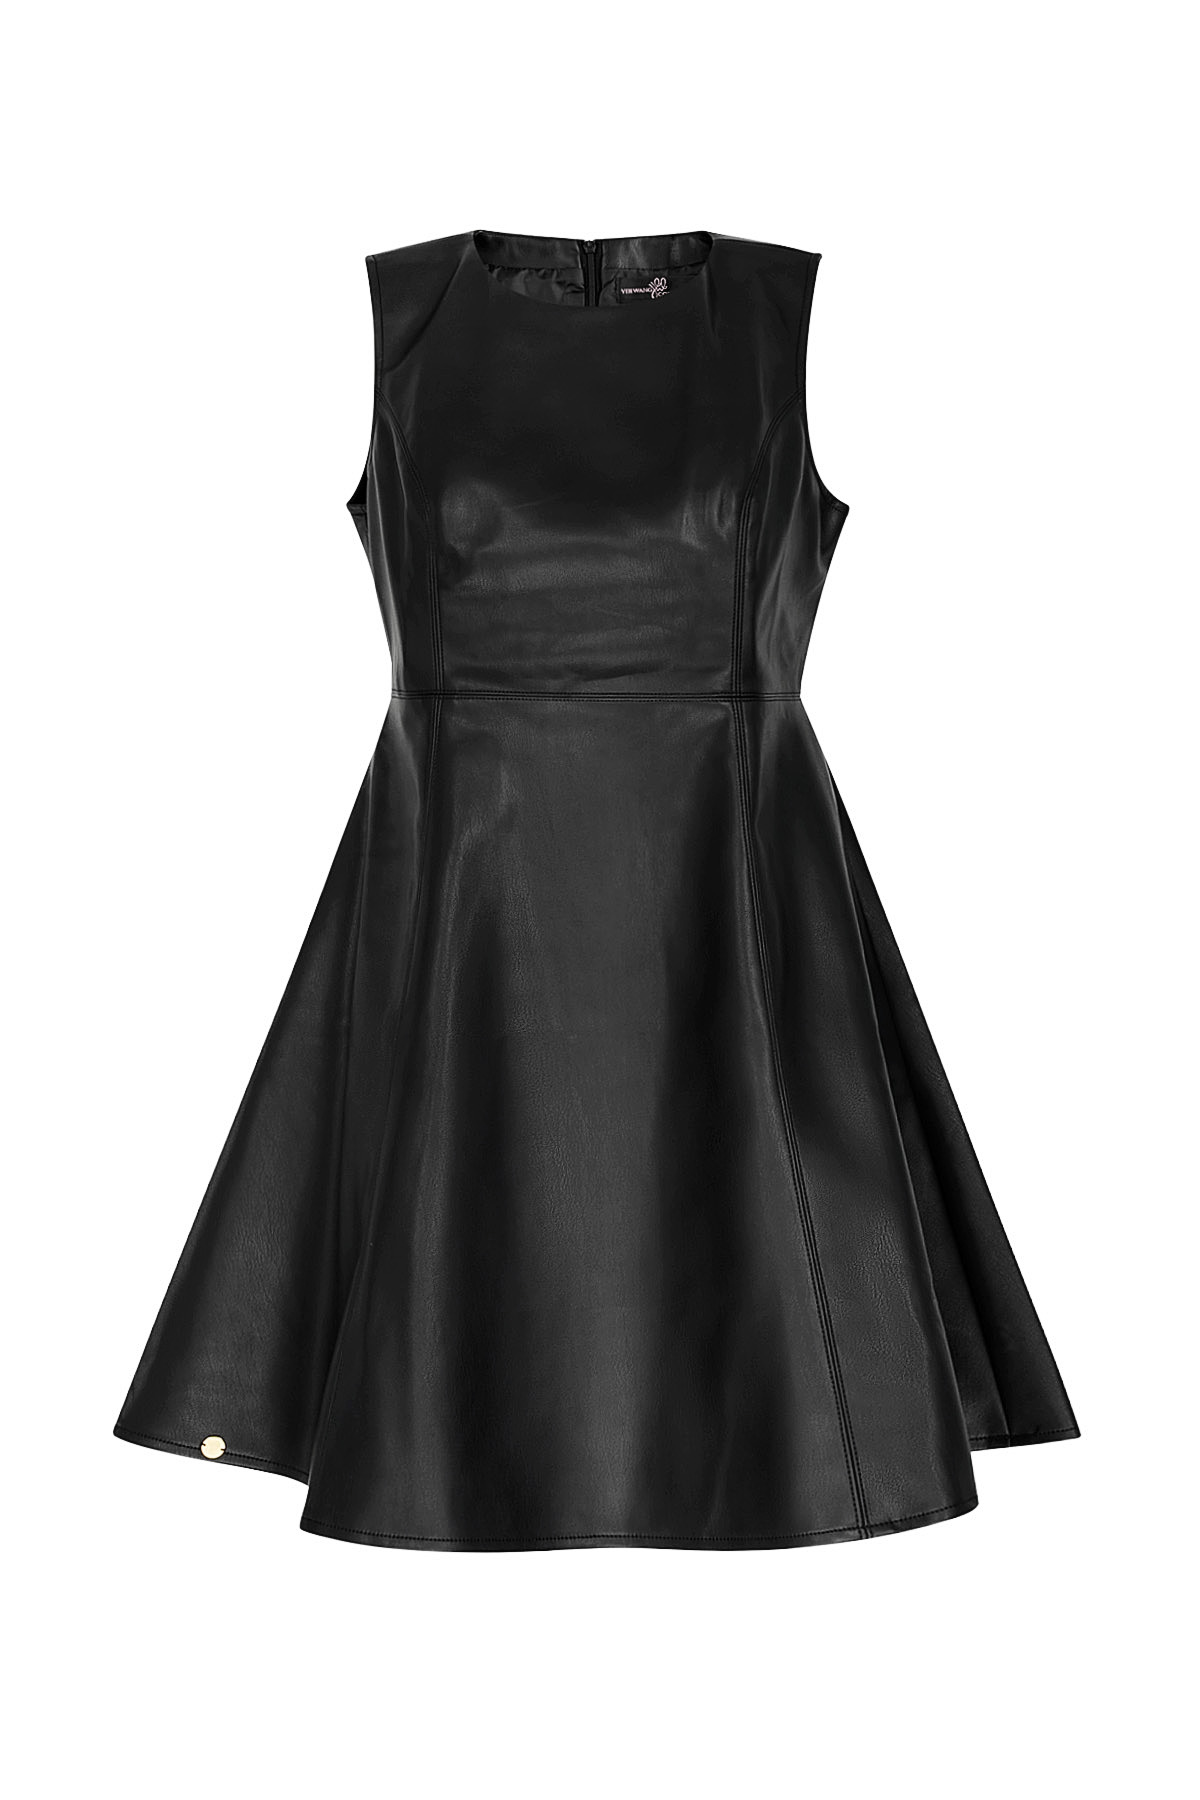 PU leather dress flared - black